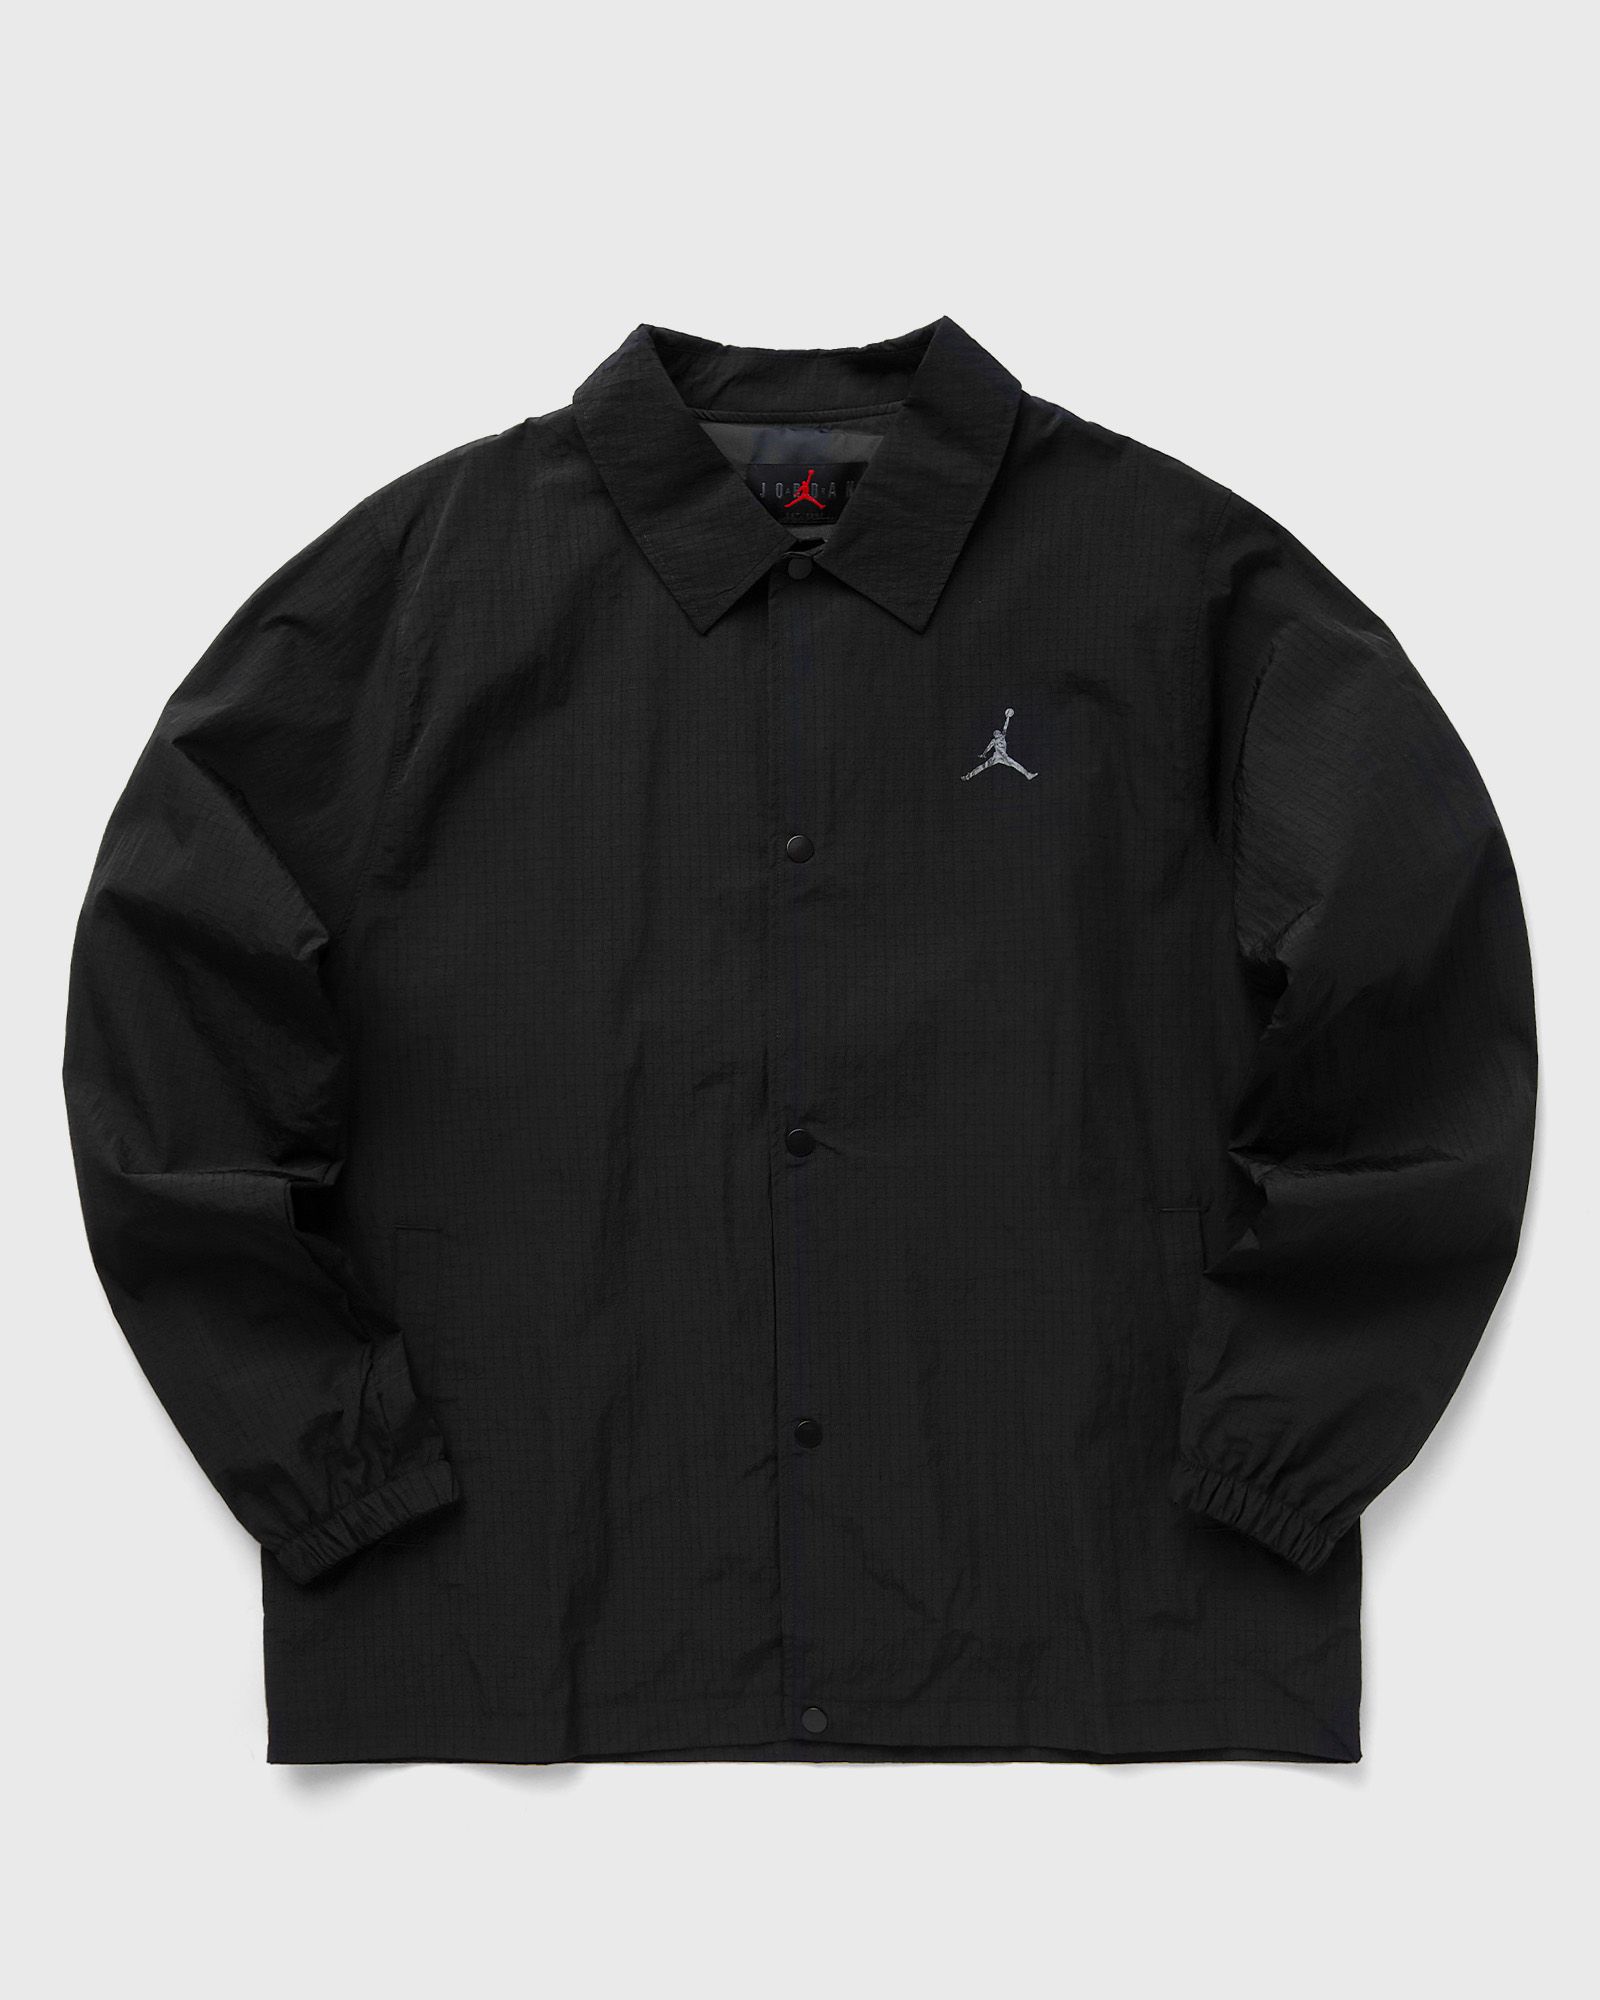 Jordan - essentials coaches jacket men overshirts|windbreaker black in größe:l